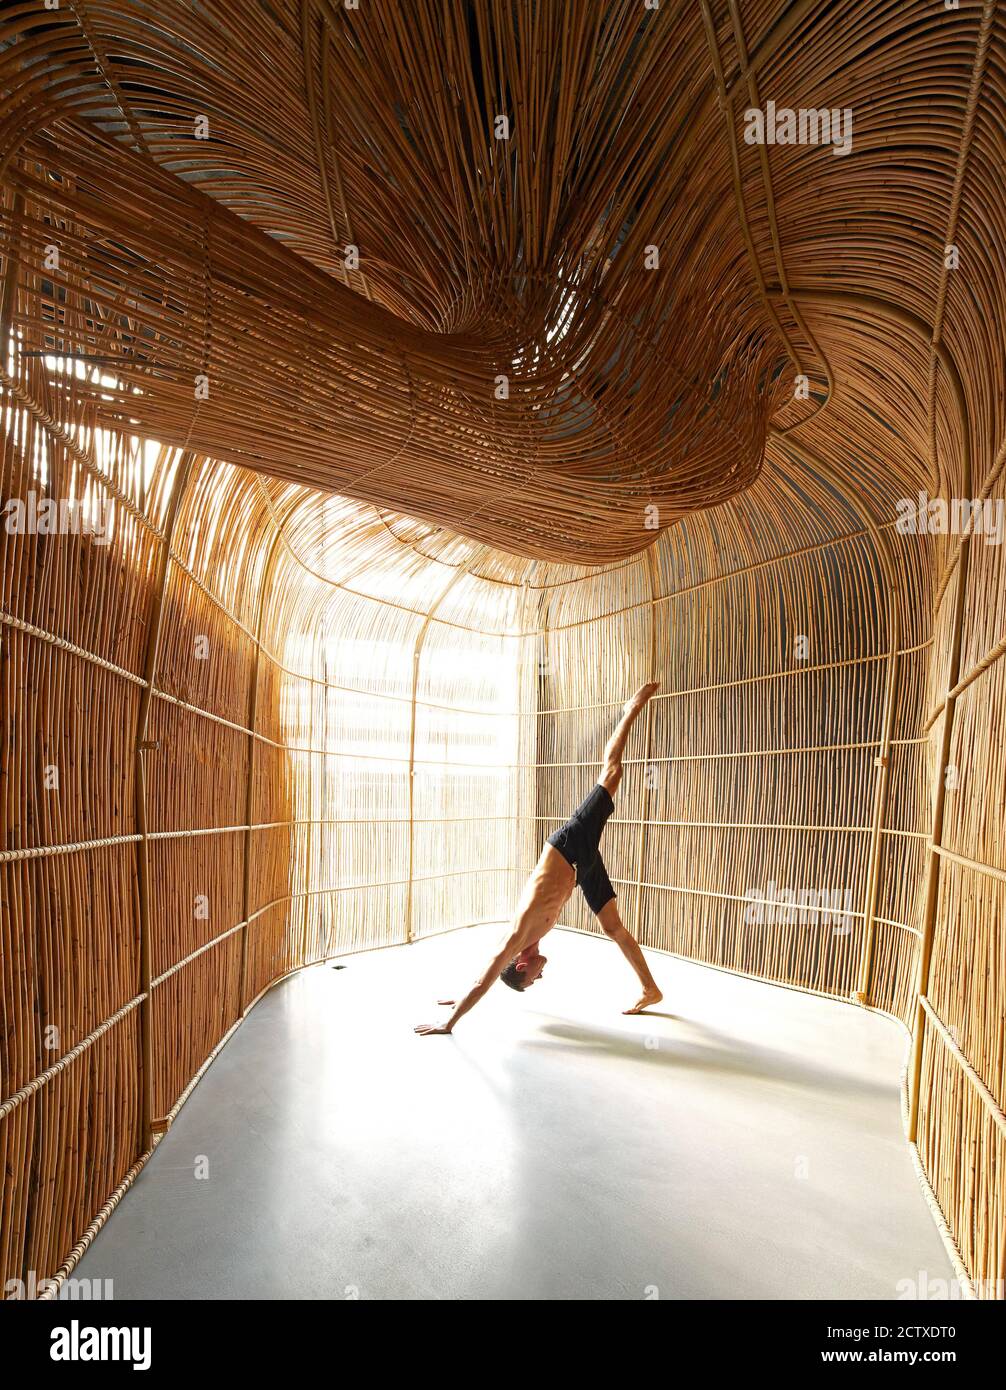 https://c8.alamy.com/comp/2CTXDT0/yoga-studio-pod-with-instructor-vikasa-yoga-centre-bangkok-thailand-architect-enter-projects-2020-2CTXDT0.jpg